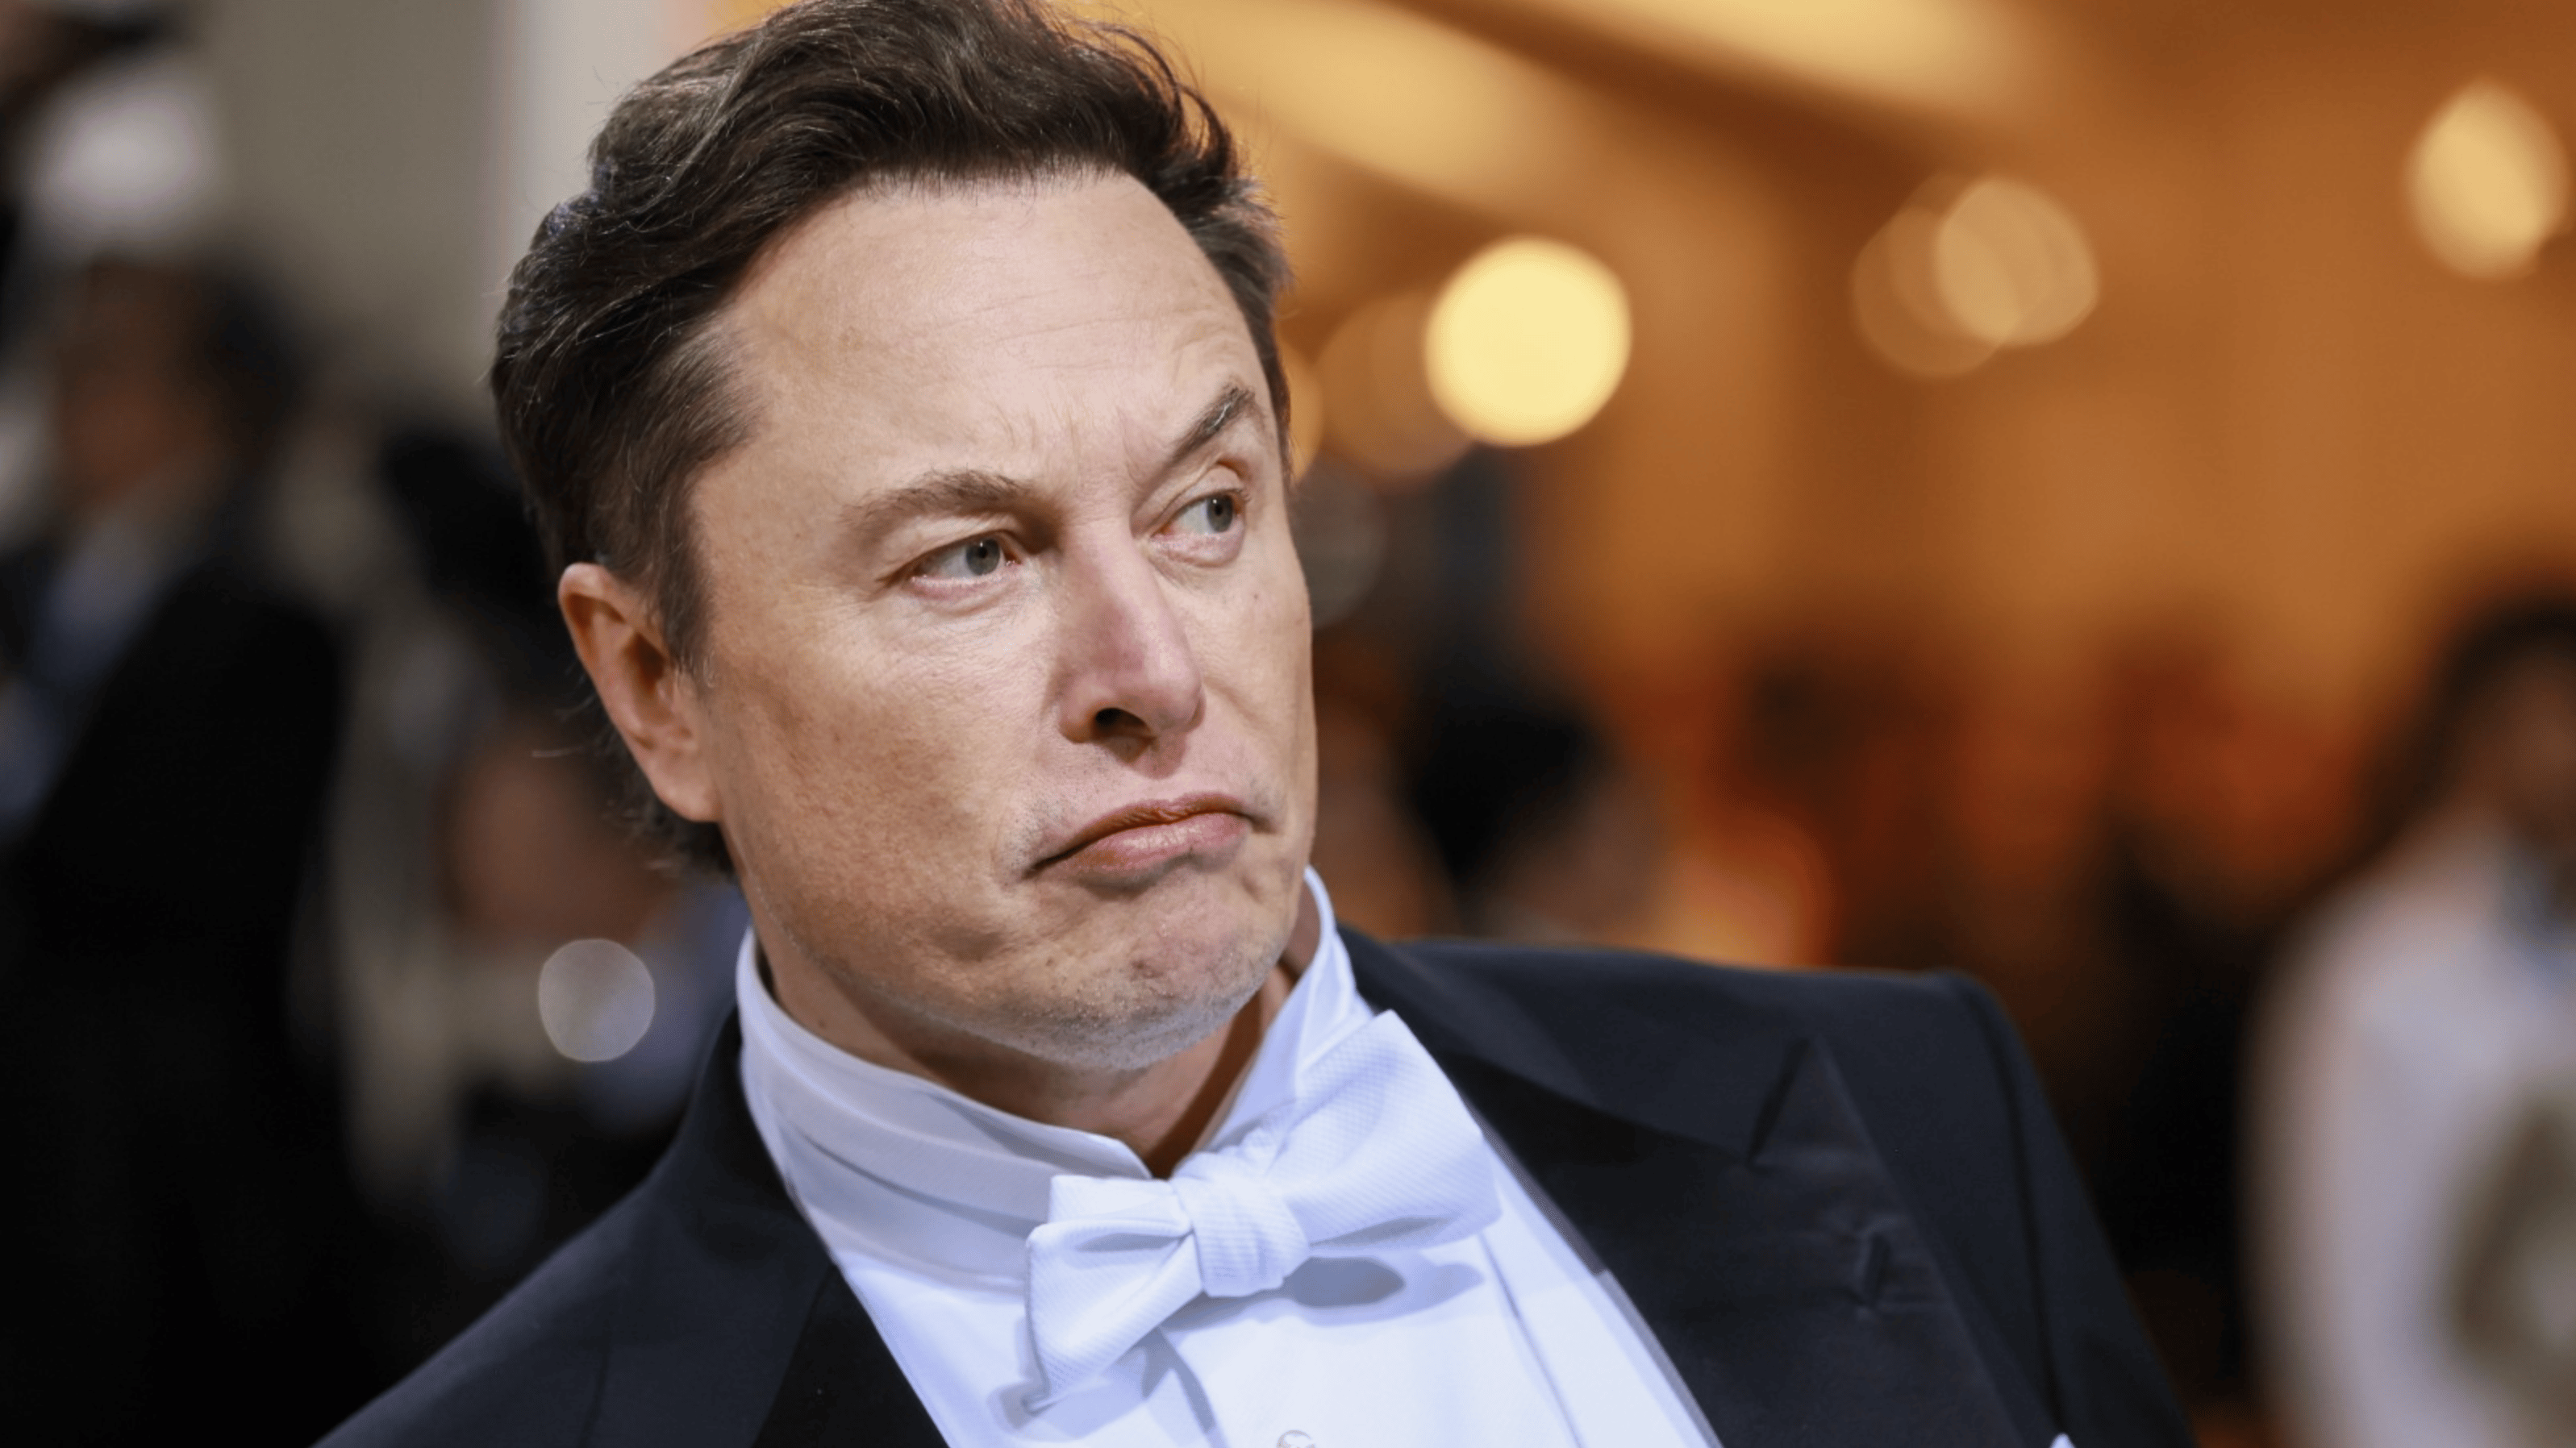 Elon Musk Takes on Tech Giant: A High-Stakes Showdown Over AI's Future Path